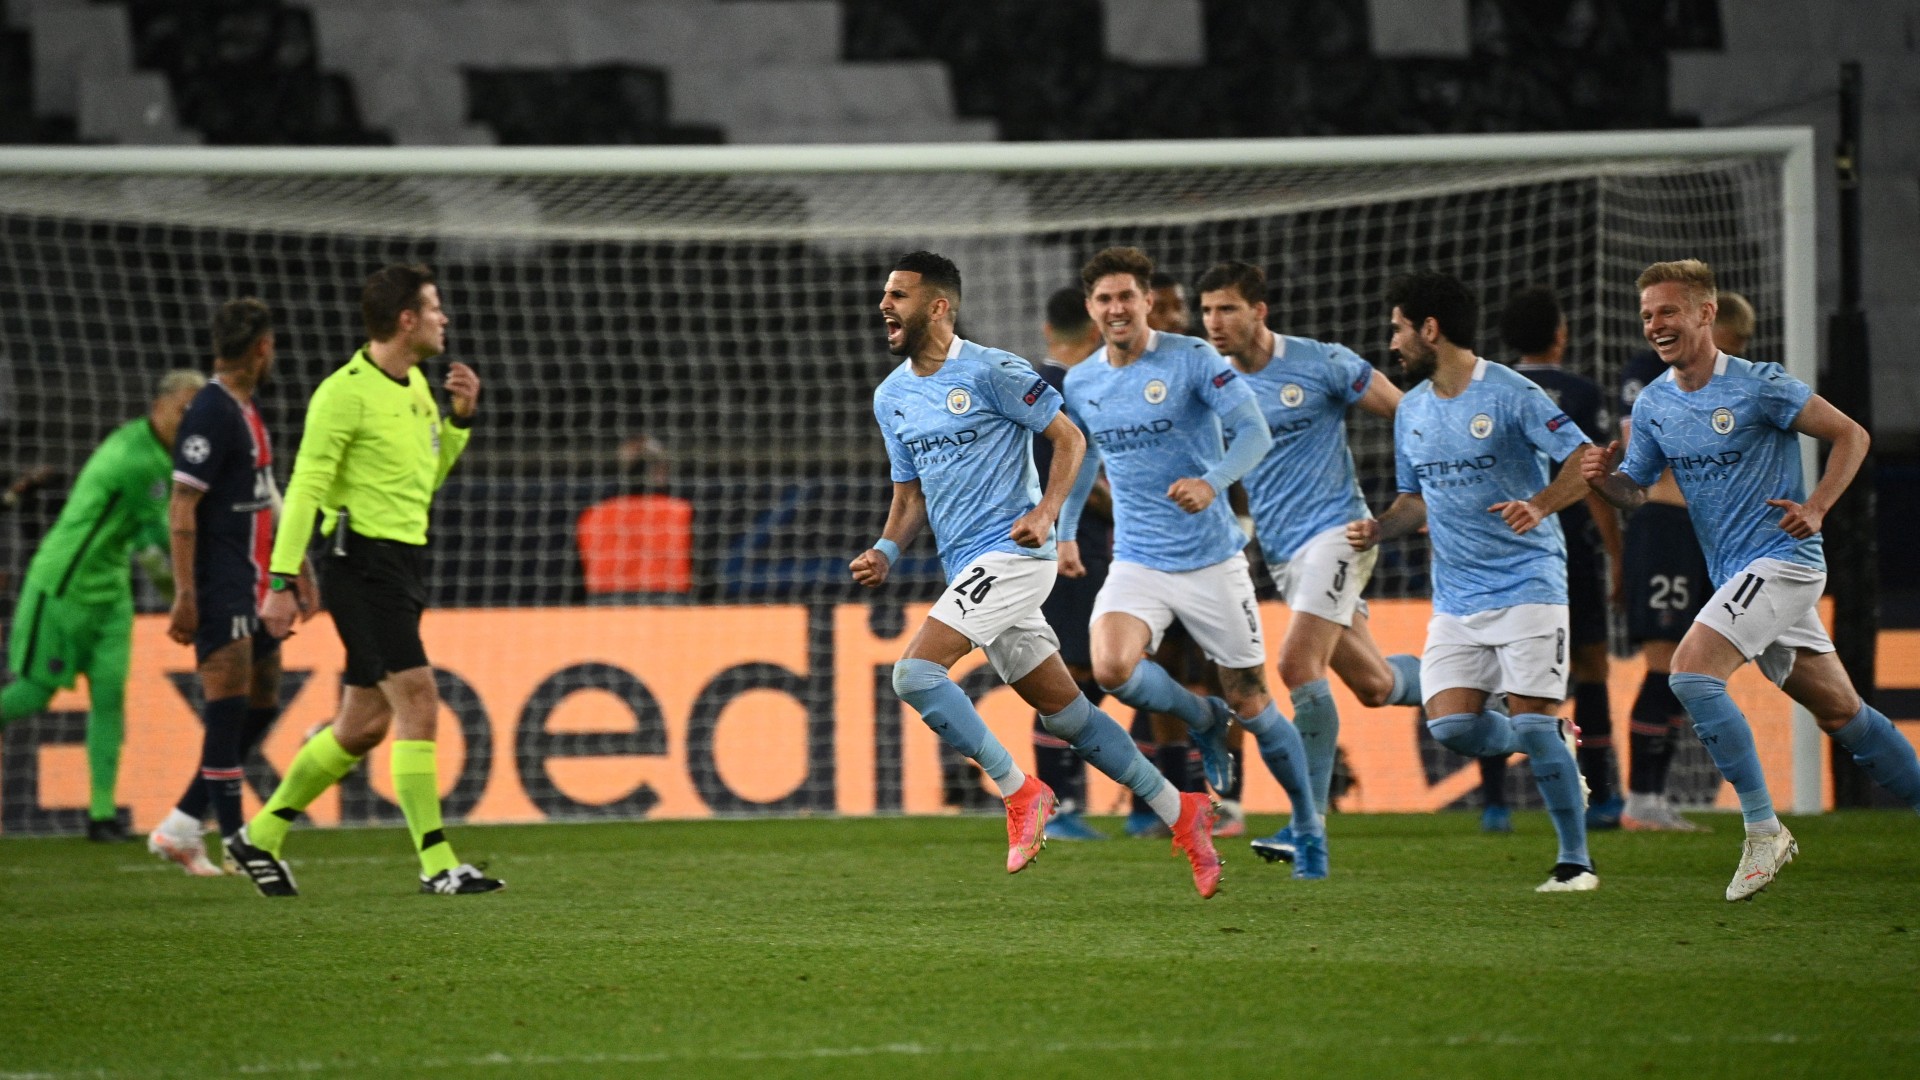 FK Crvena zvezda vs Man City: Champions League prediction, kick